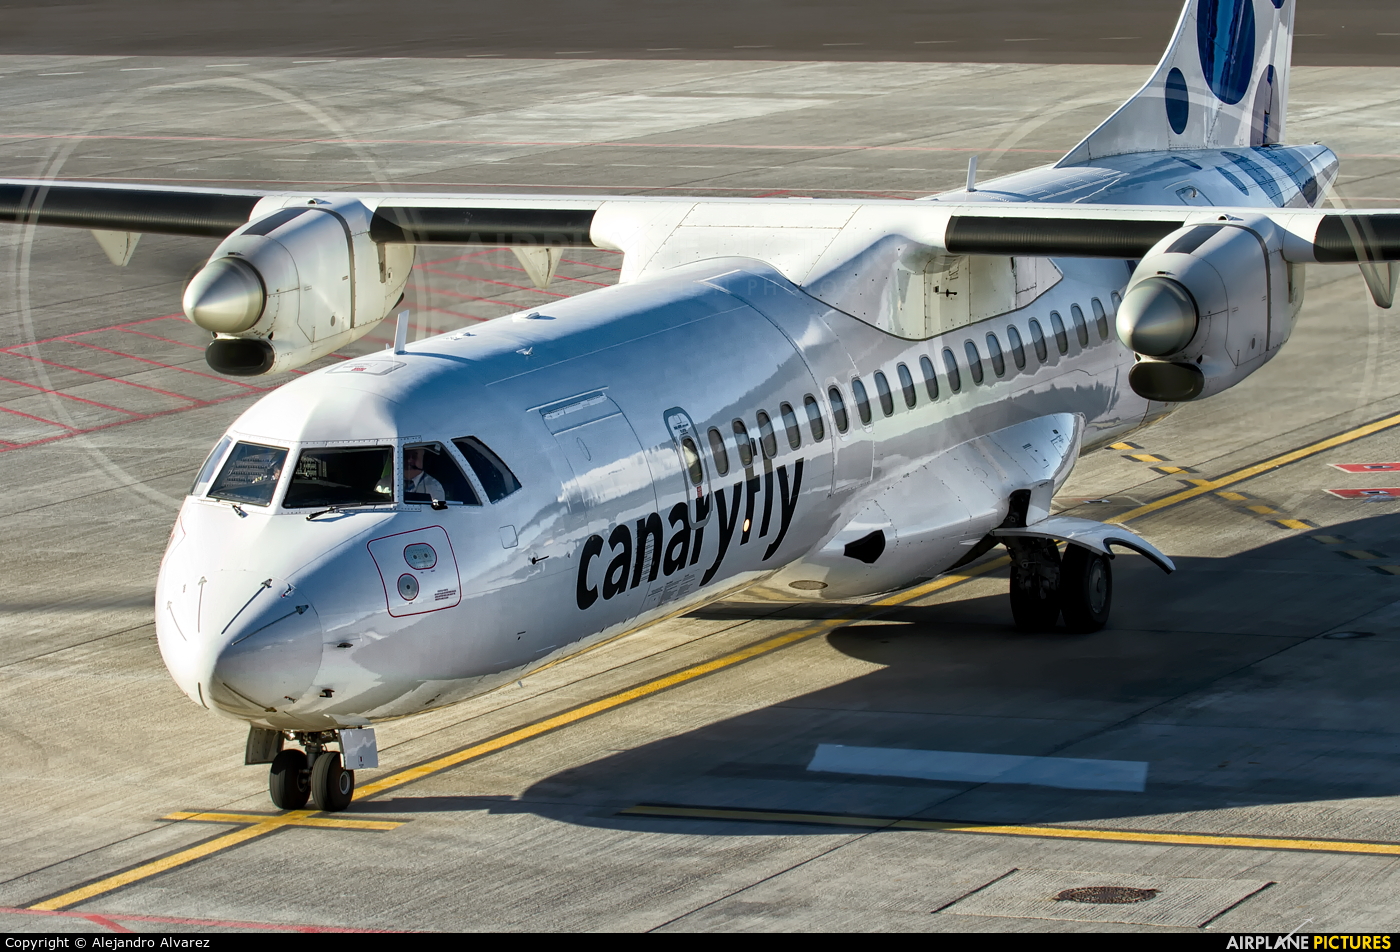 CanaryFly EC-GRP aircraft at Tenerife Norte - Los Rodeos